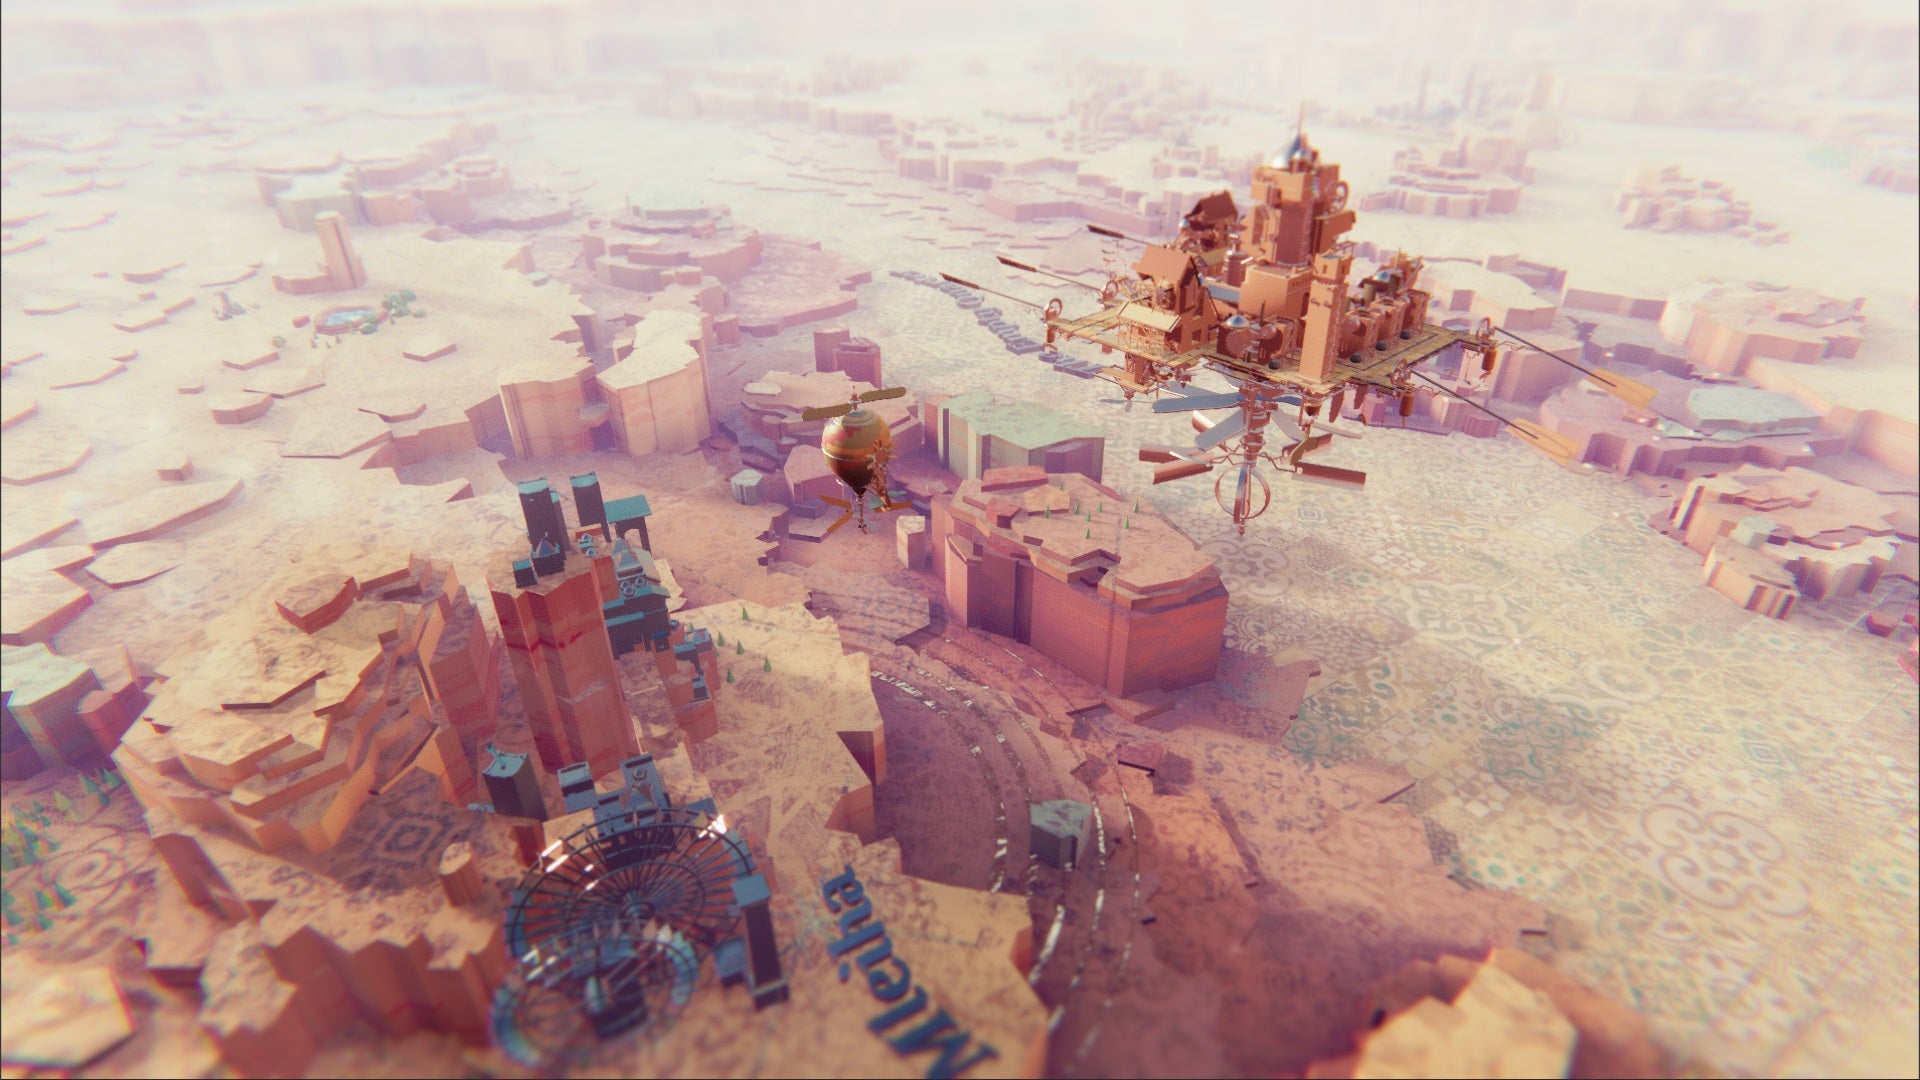 Image for Floating city management simulator Airborne Kingdom announced